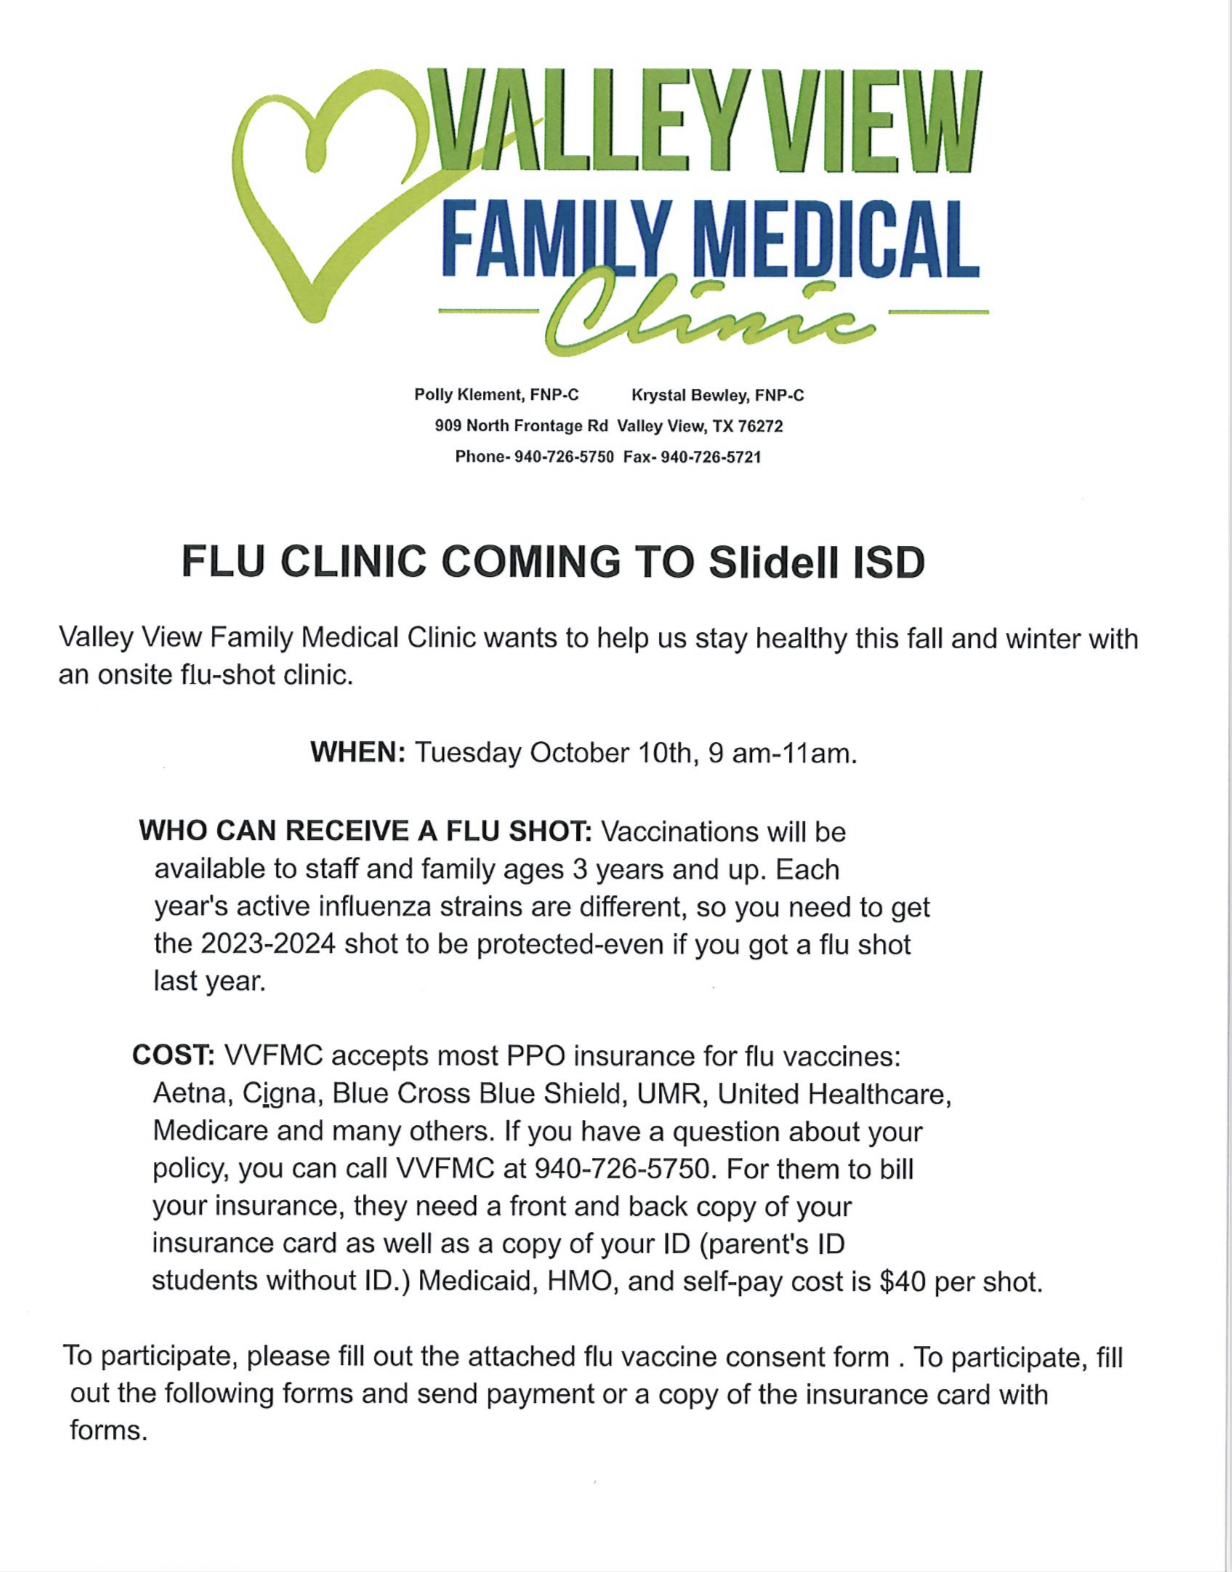 Slidell ISD Flu Clinic - Oct. 10 9-11 am 